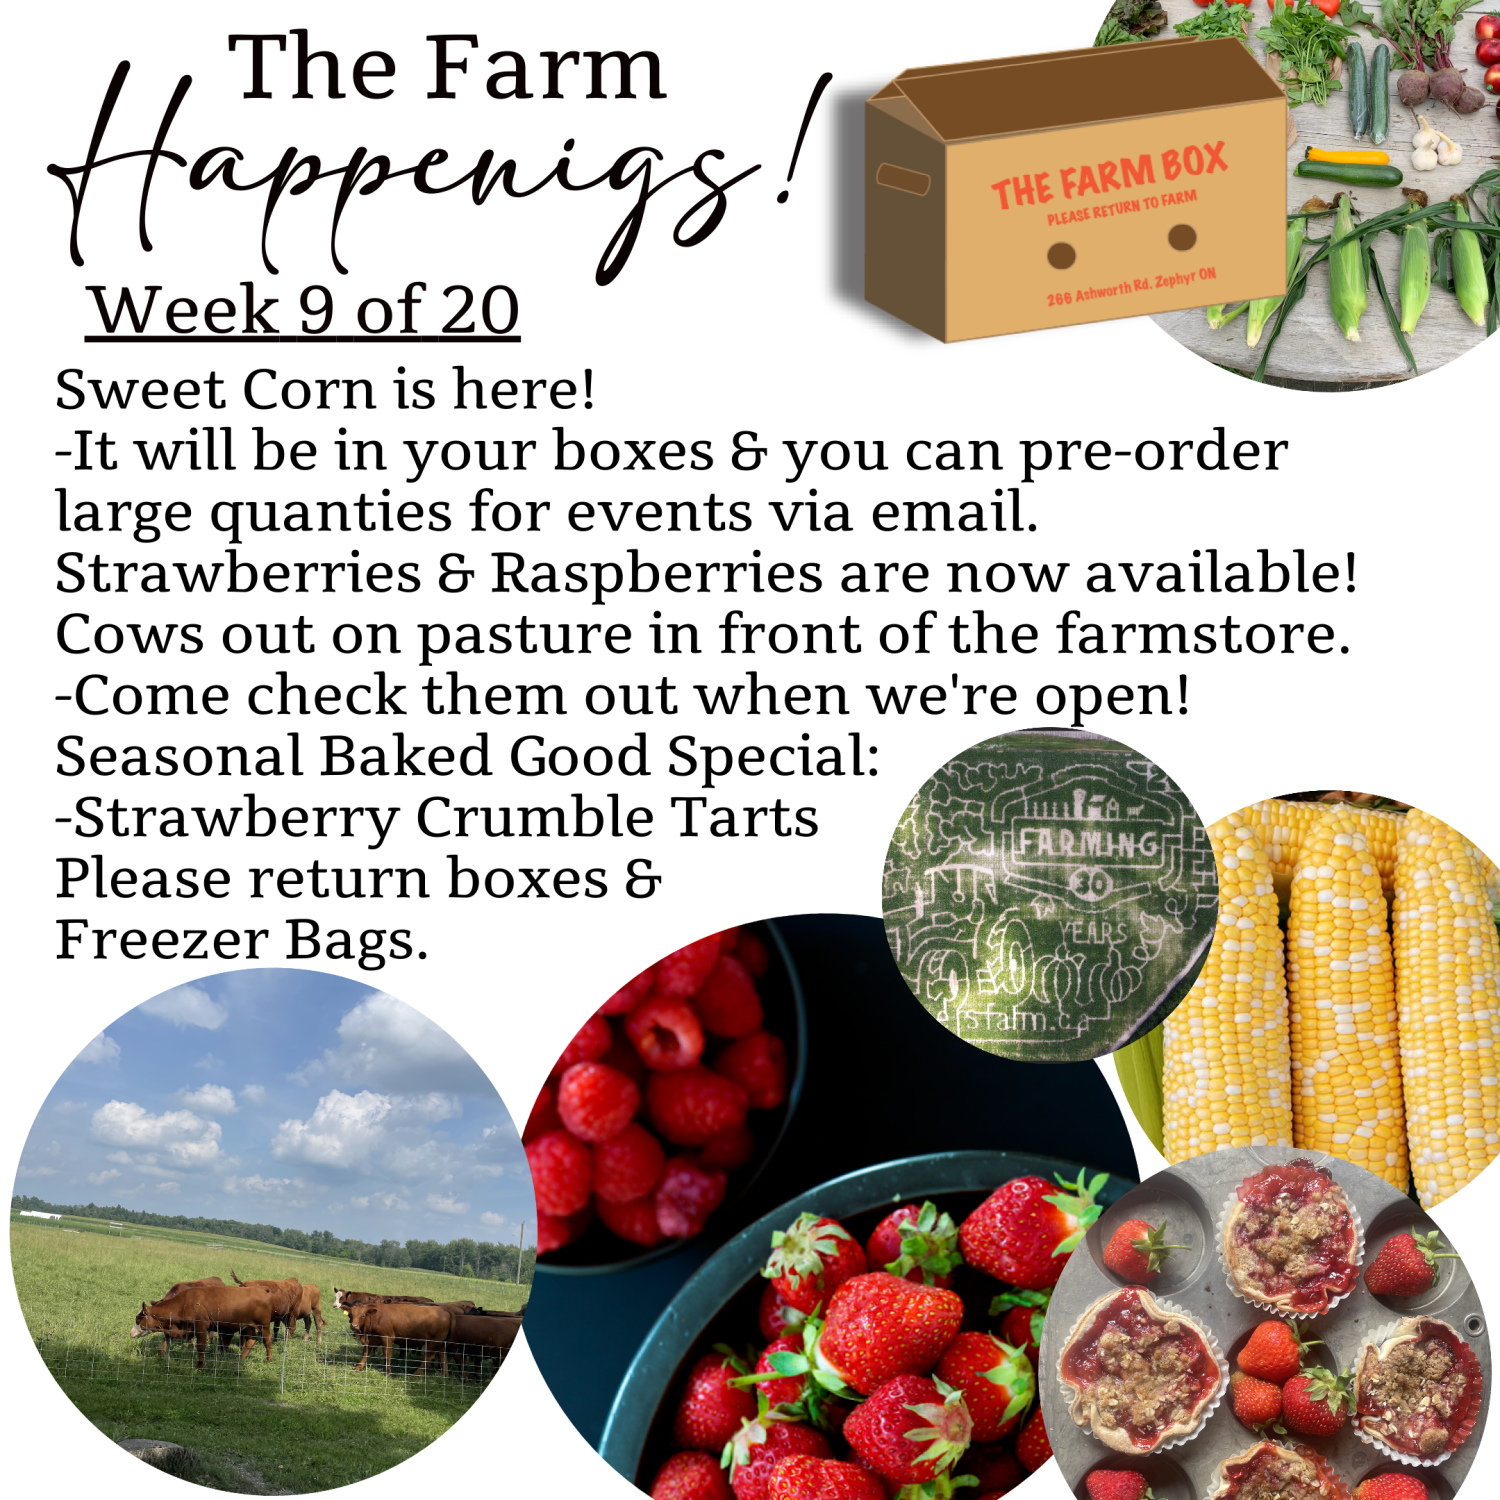 "The Farm Box"-Coopers CSA Farm Farm Happenings Week 9